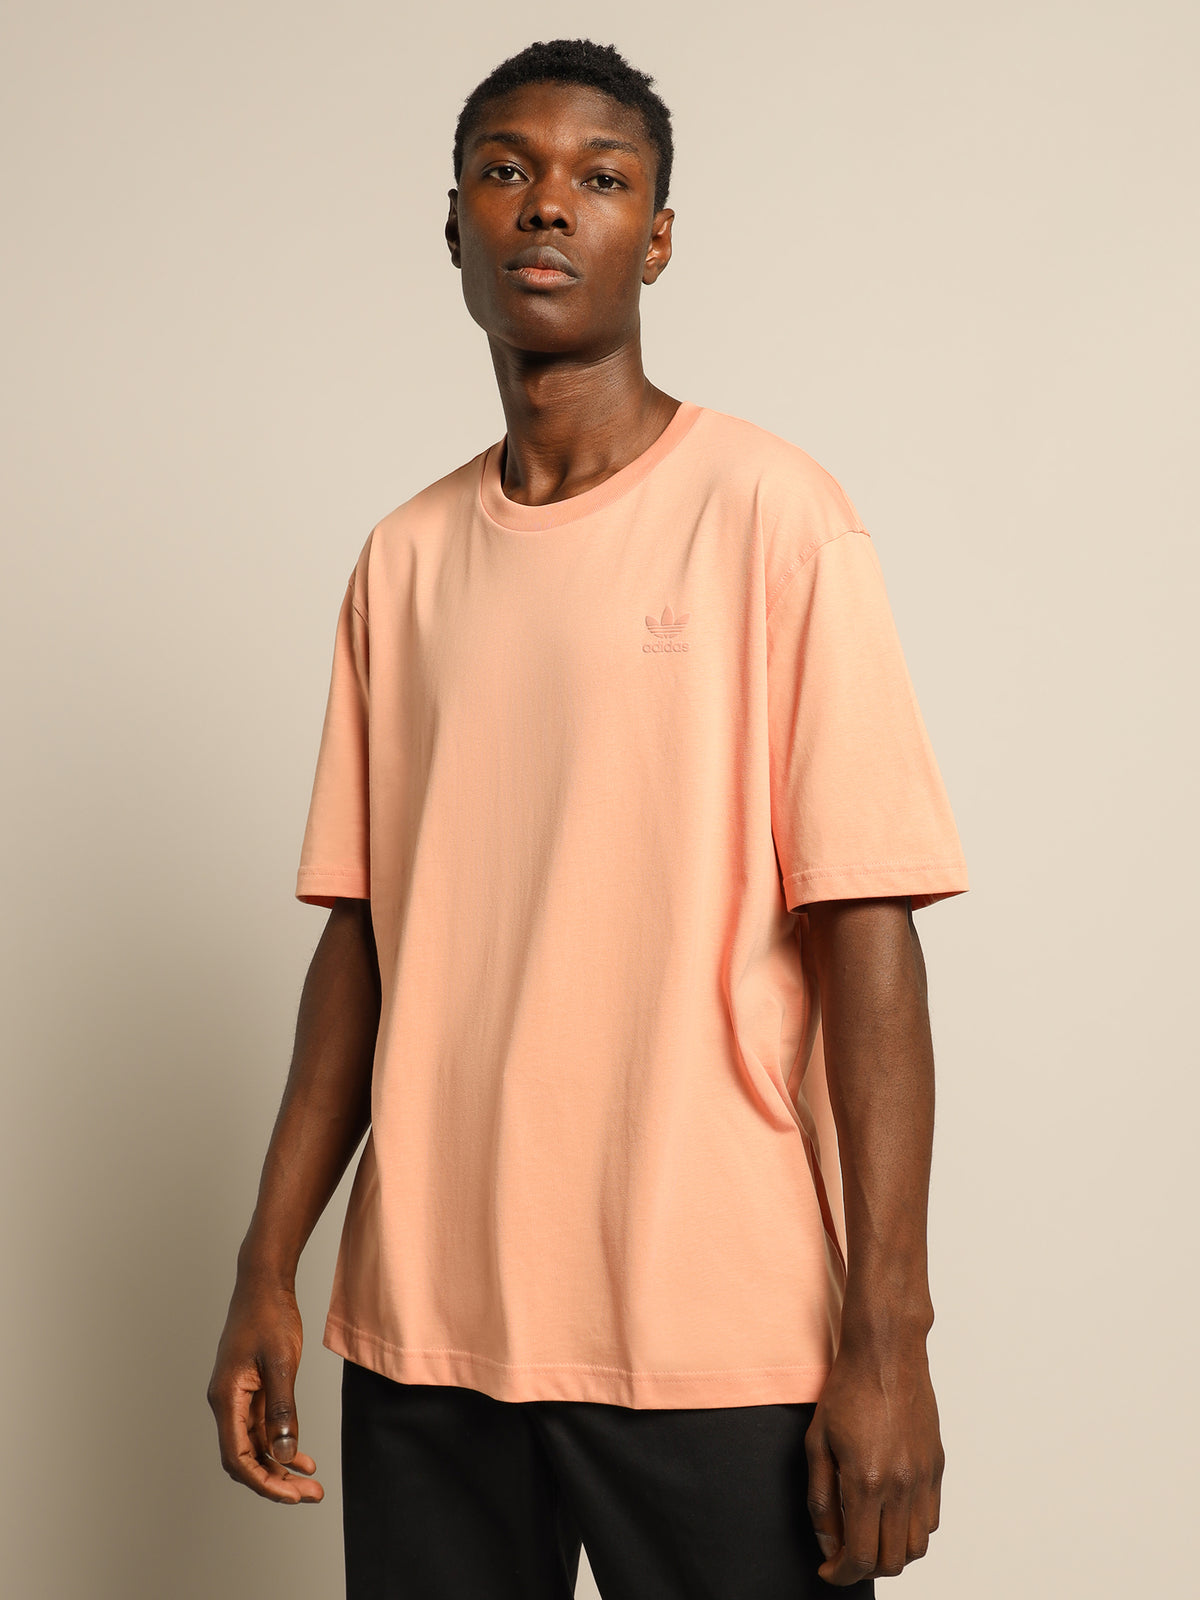 Adicolor Classics Trefoil T-Shirt in Ambient Blush